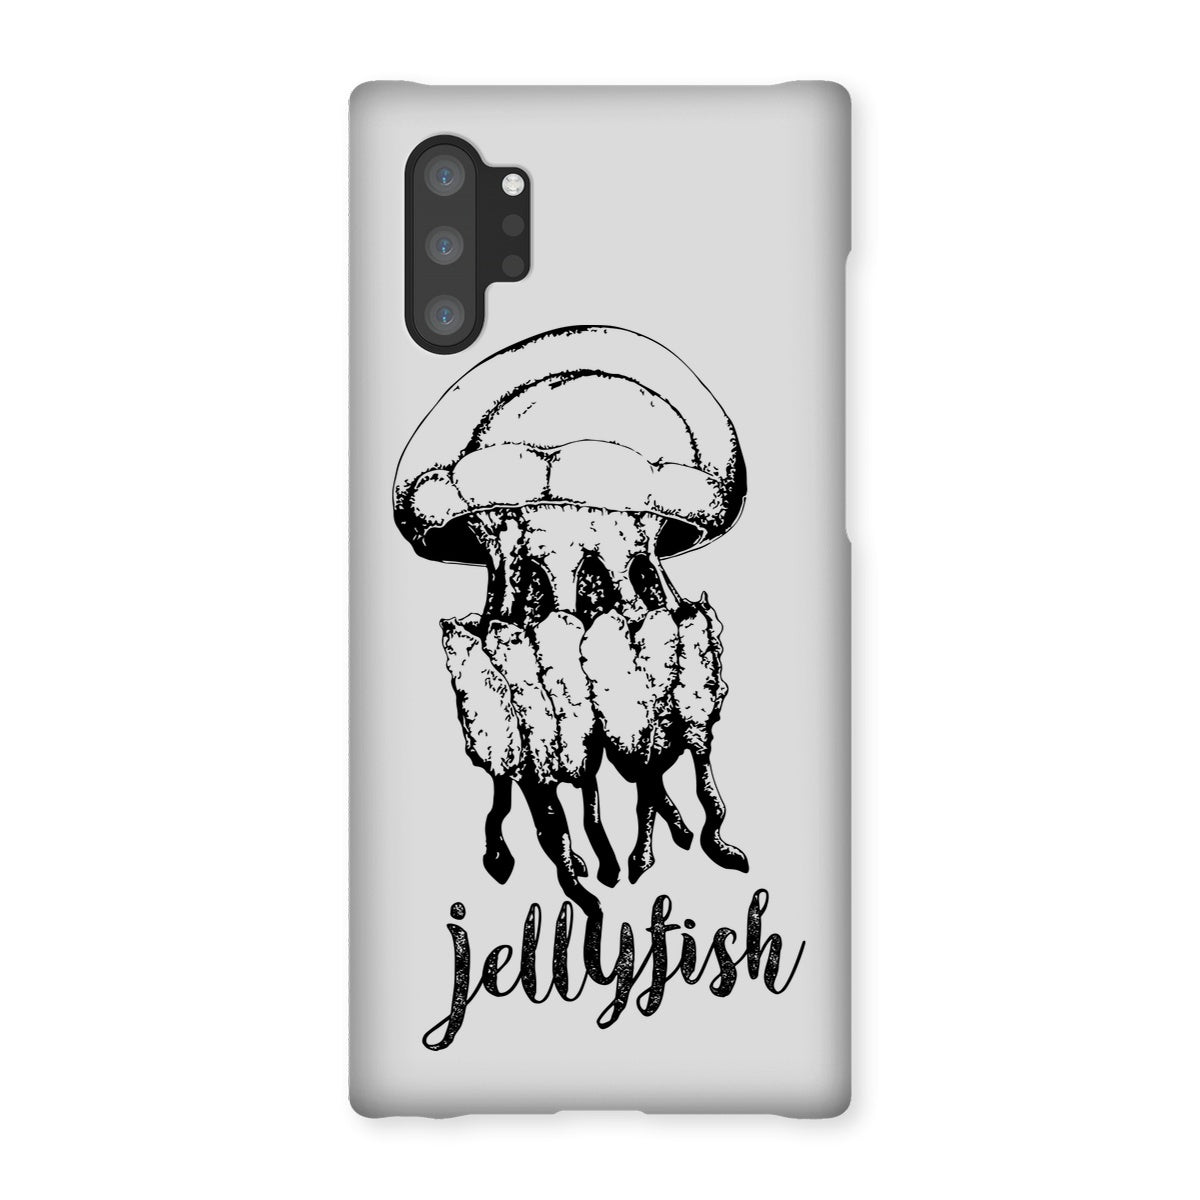 AQUA B&W - 02 - Jellyfish - Snap Phone Case